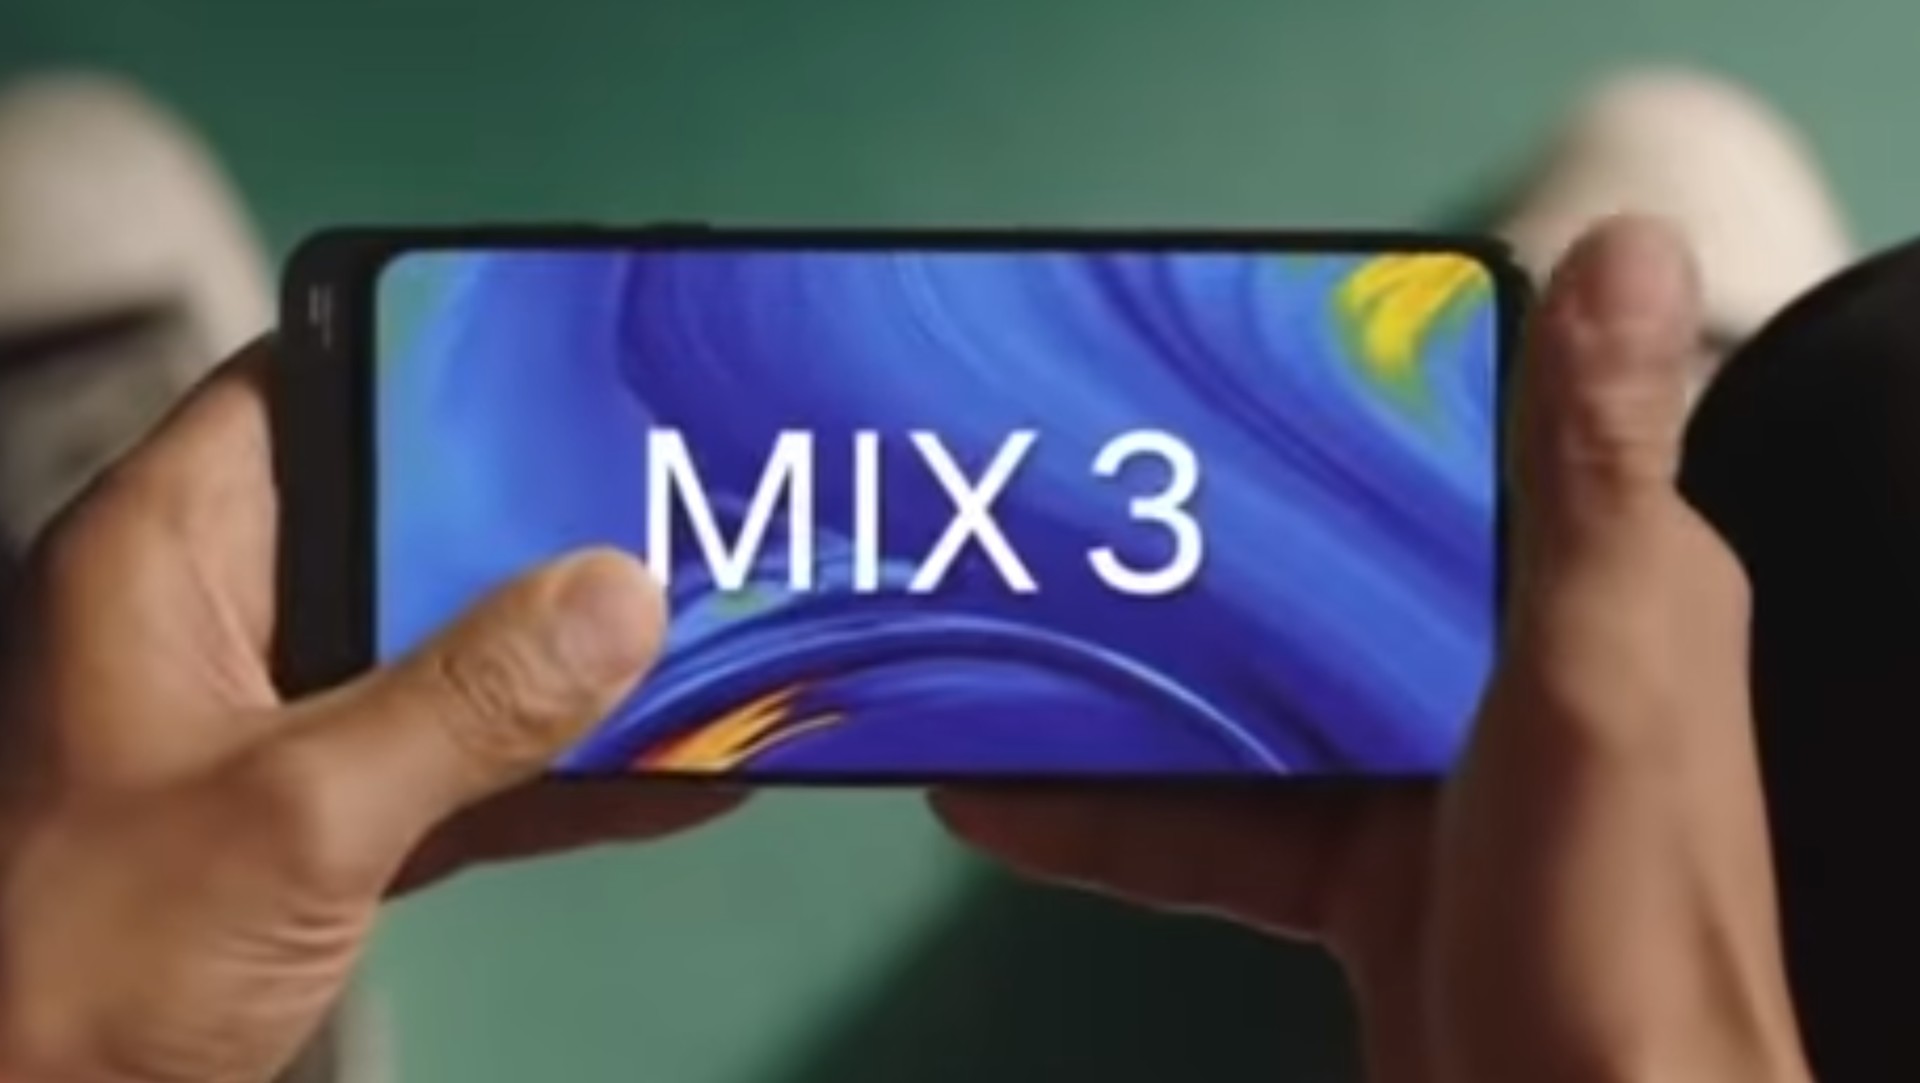 The Xiaomi Mi Mix 3 in a person's hand.